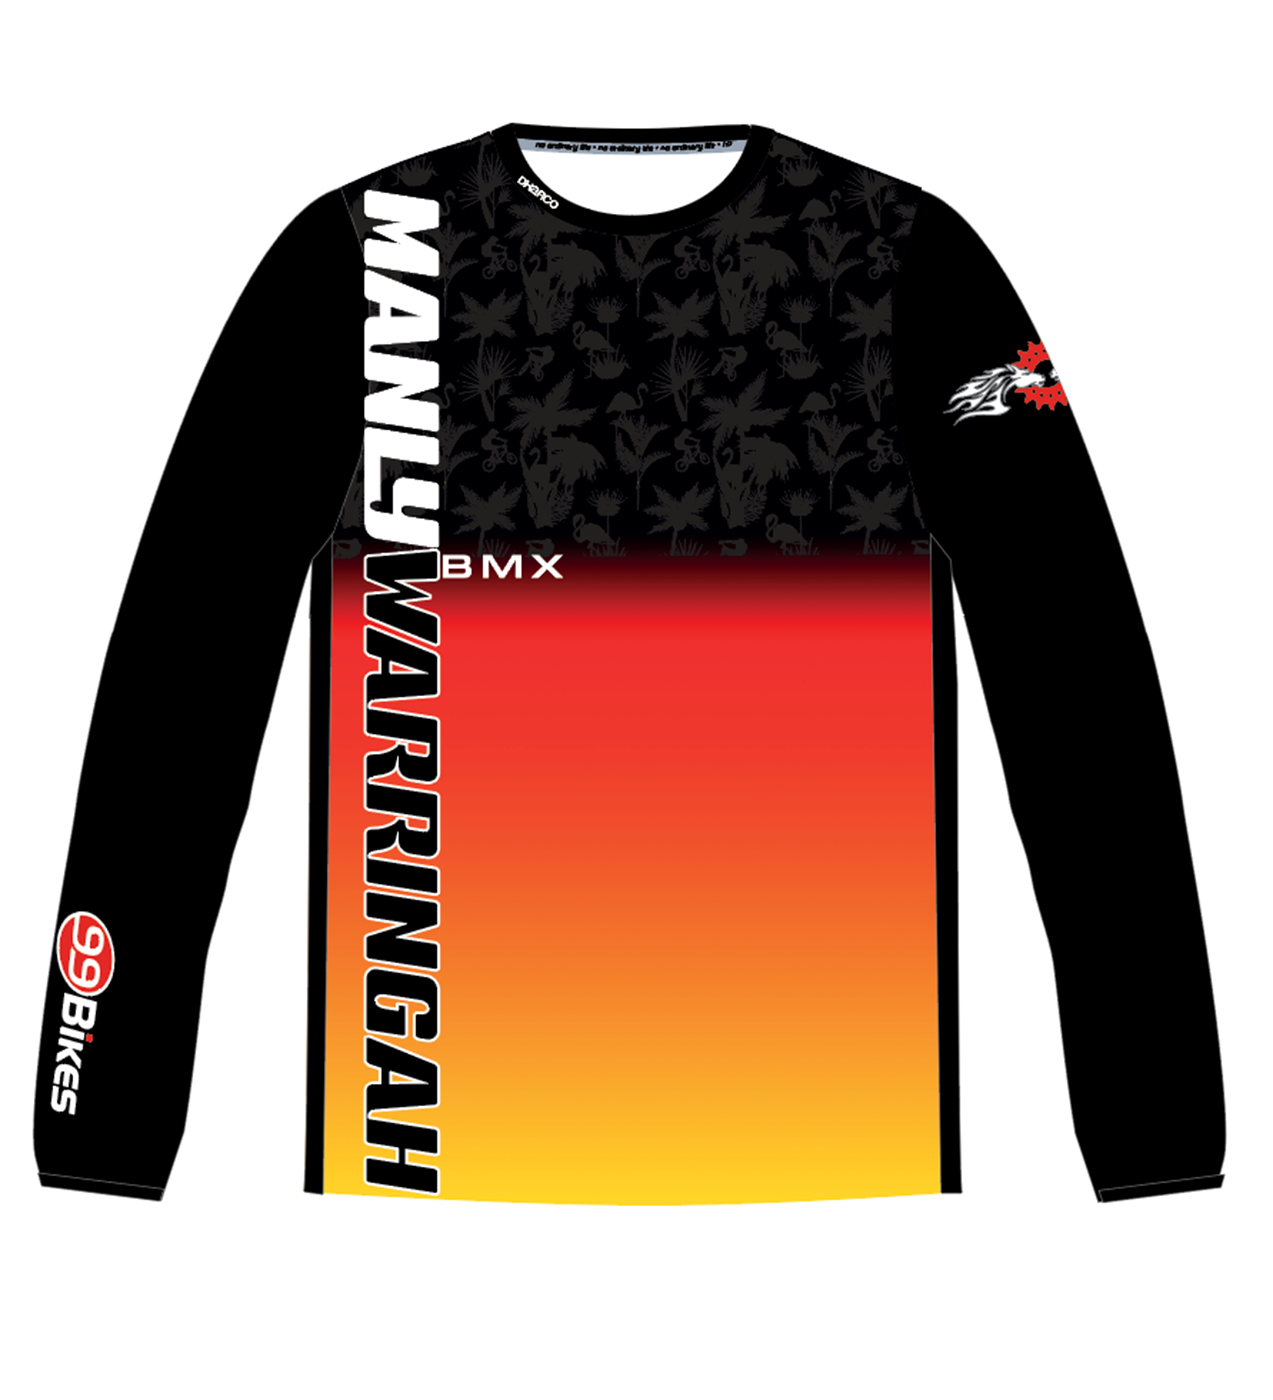 NAME PRINTING - for Manly Warringah BMX Club Jersey